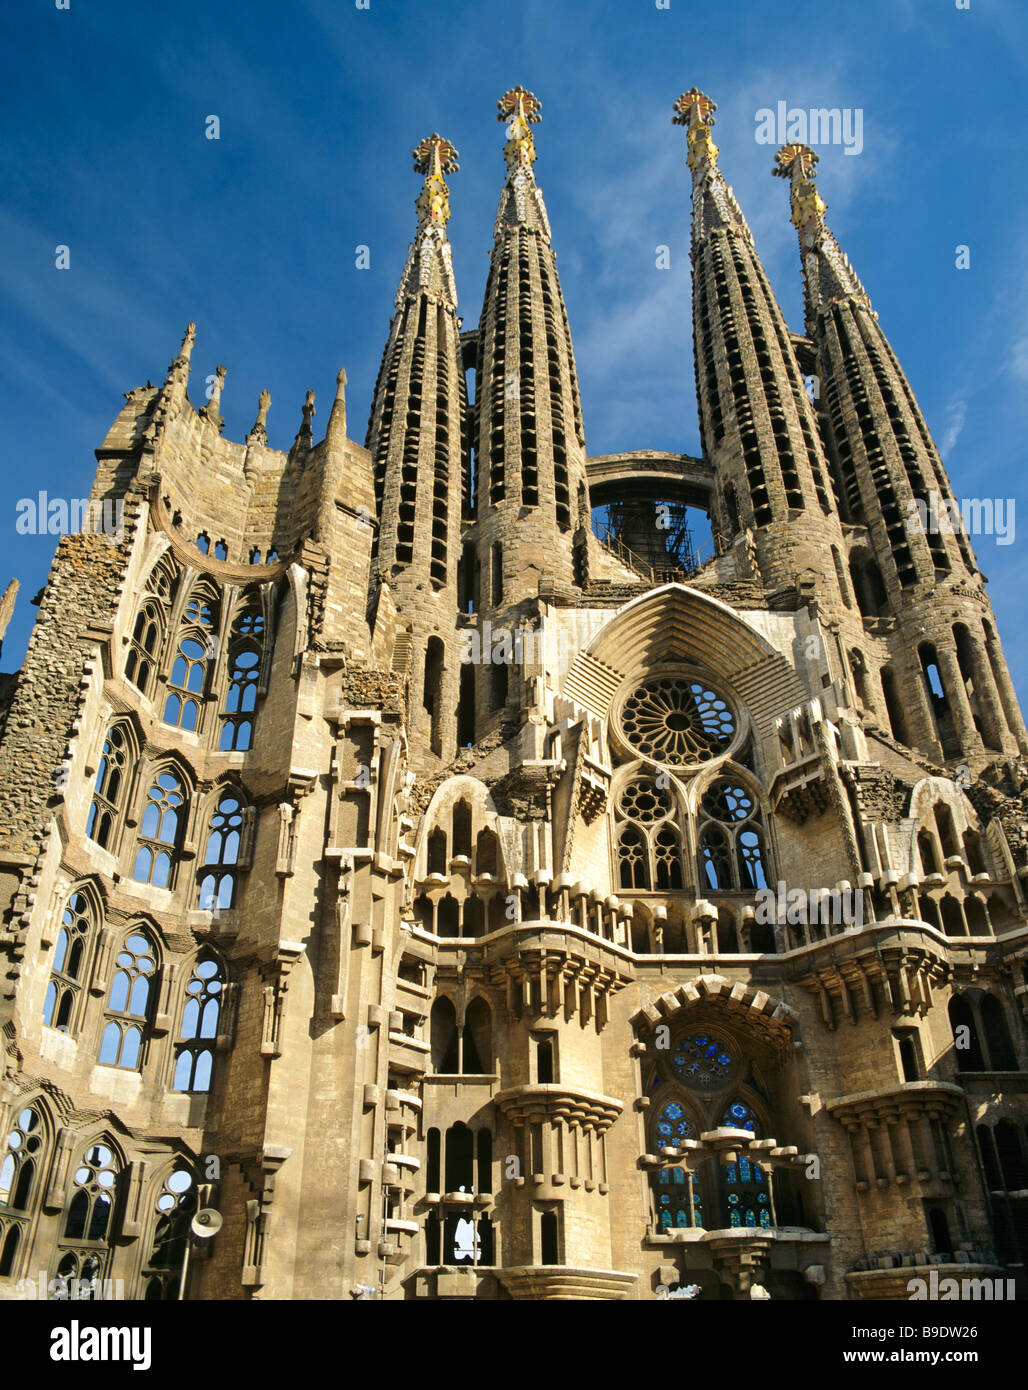 Towers of the Sagrada Familia temple, Gaudi, Barcelona, Catalonia, Spain Stock Photo